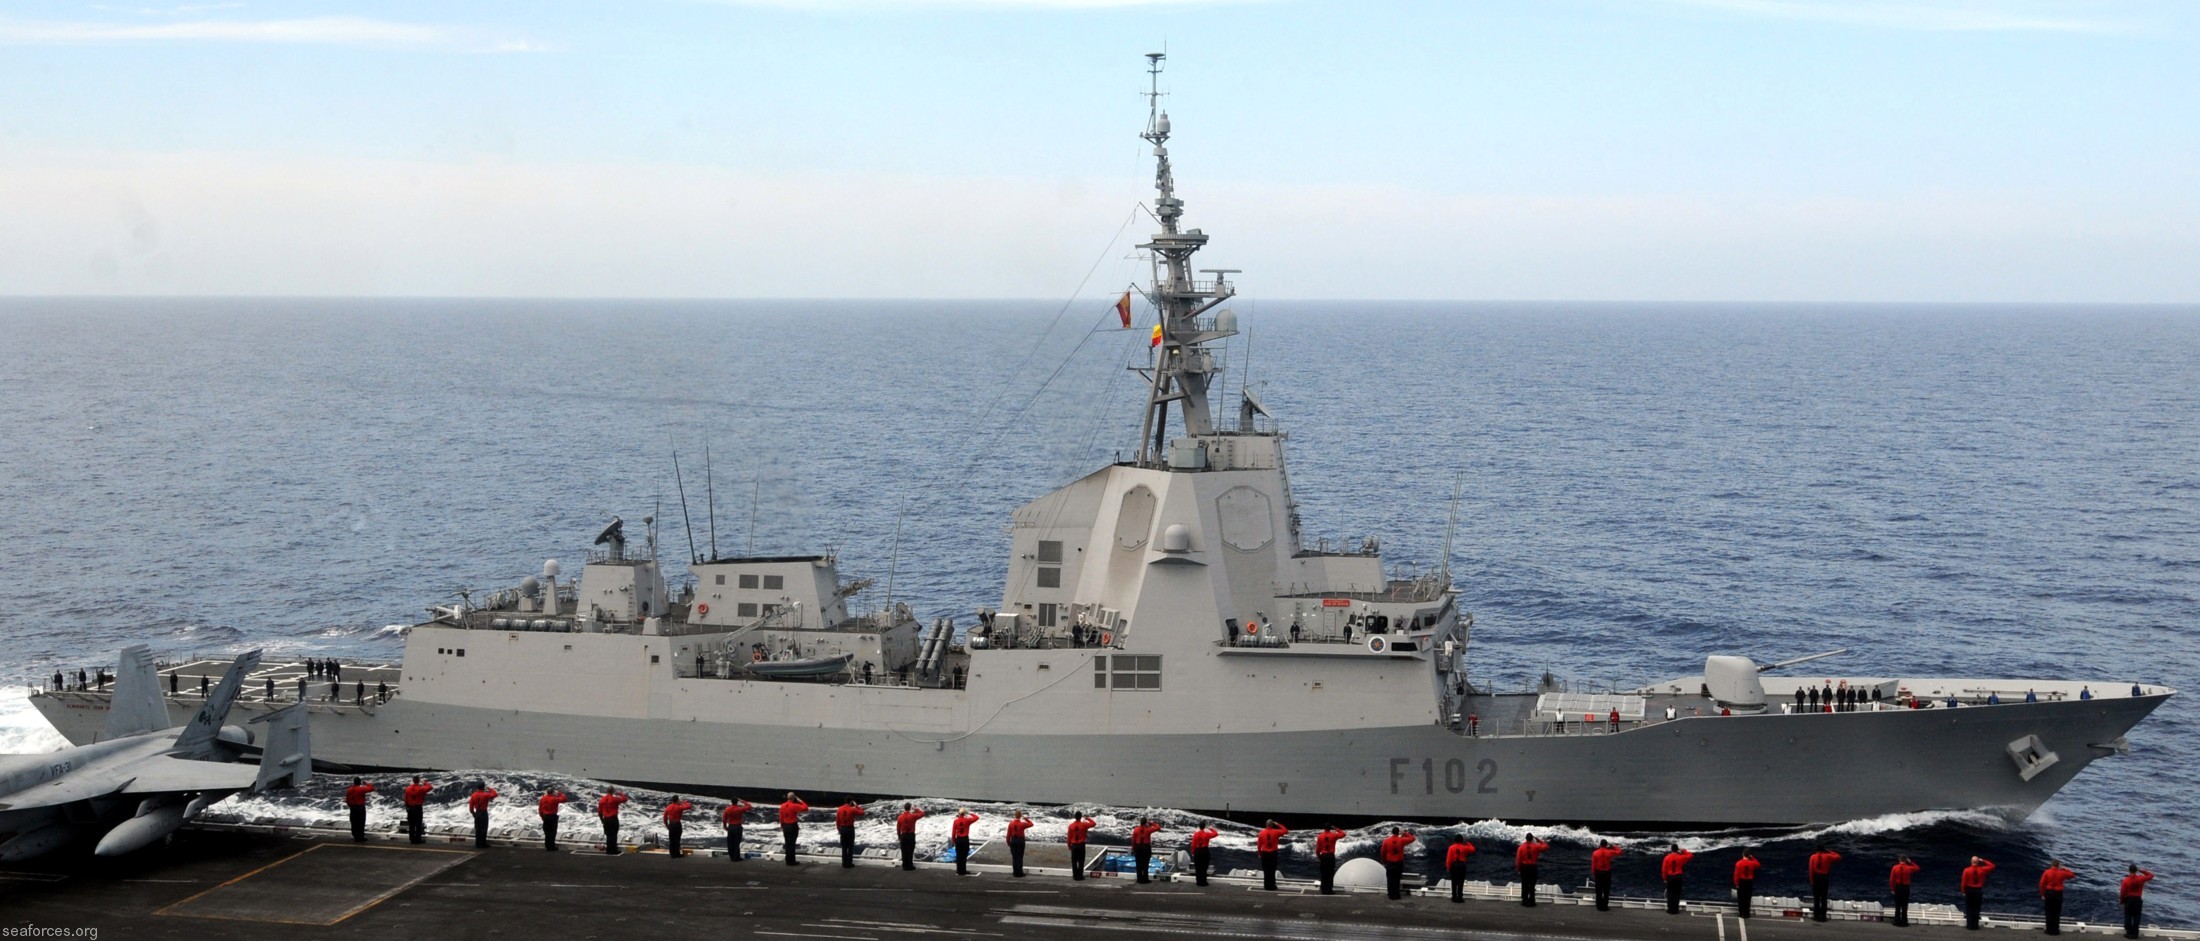 f-102 sps juan de borbon f100 bazan class guided missile frigate spanish navy 06